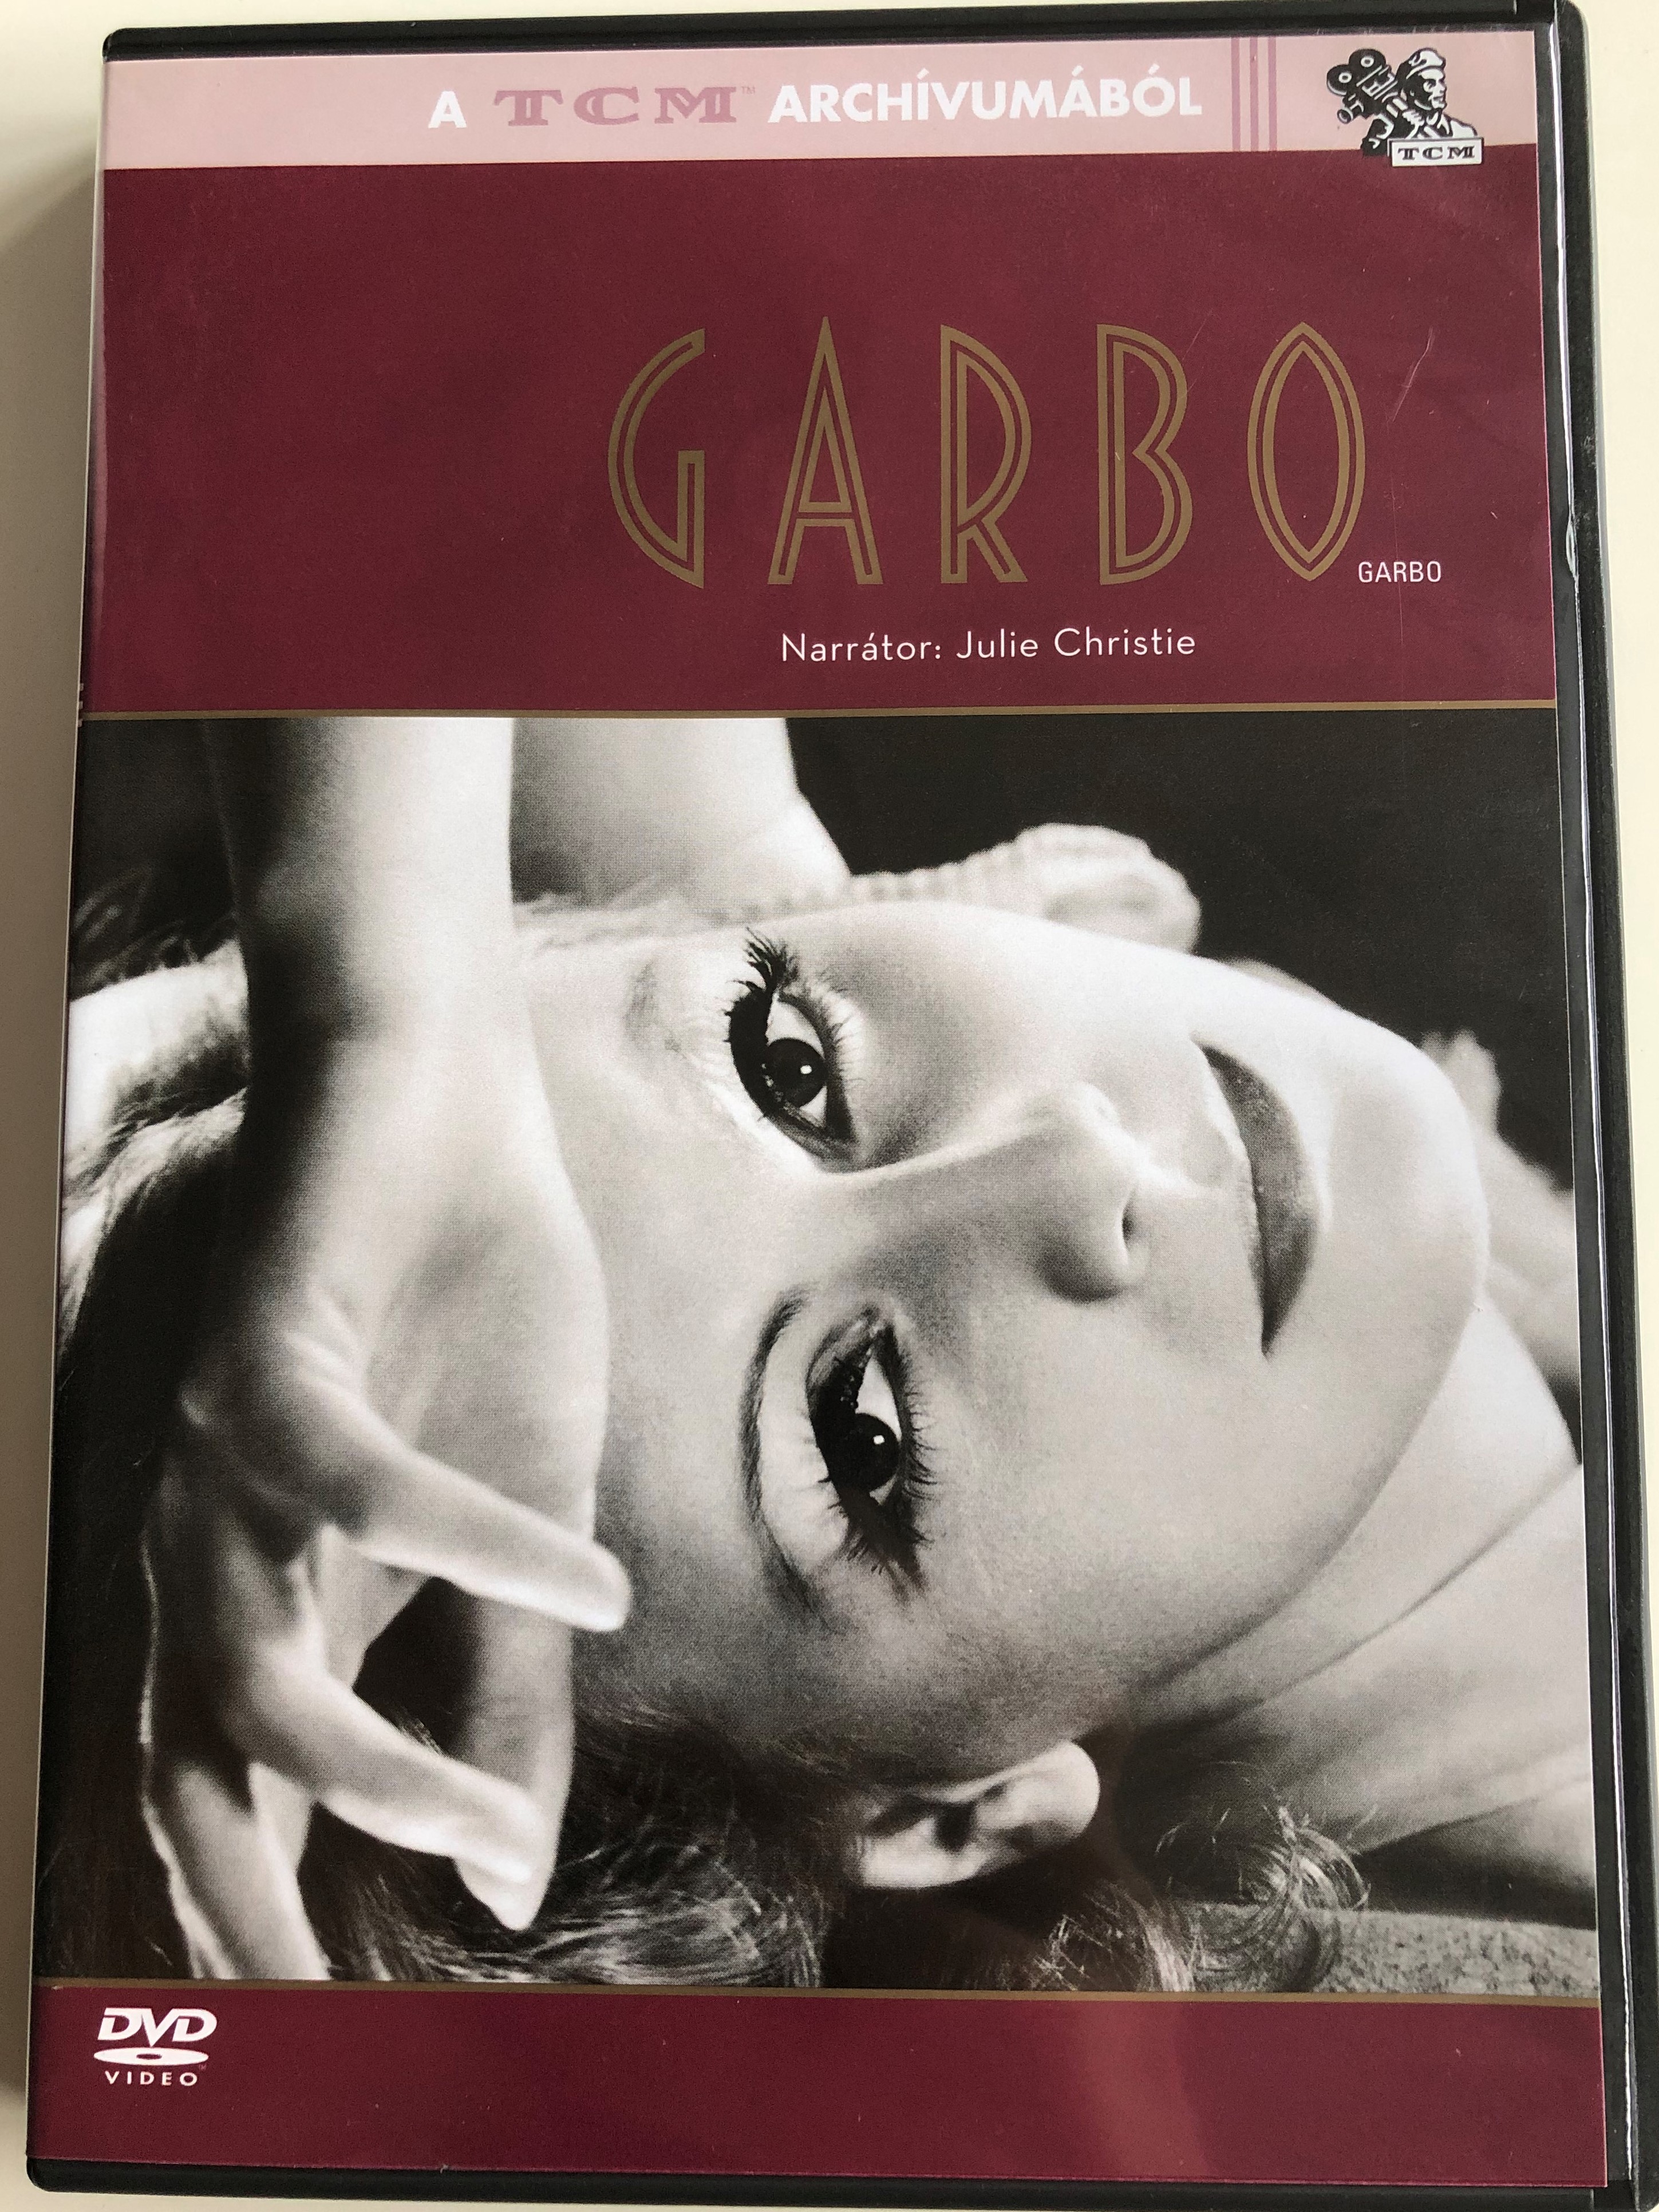 garbo-dvd-2005-narrated-by-juli-christie-1.jpg